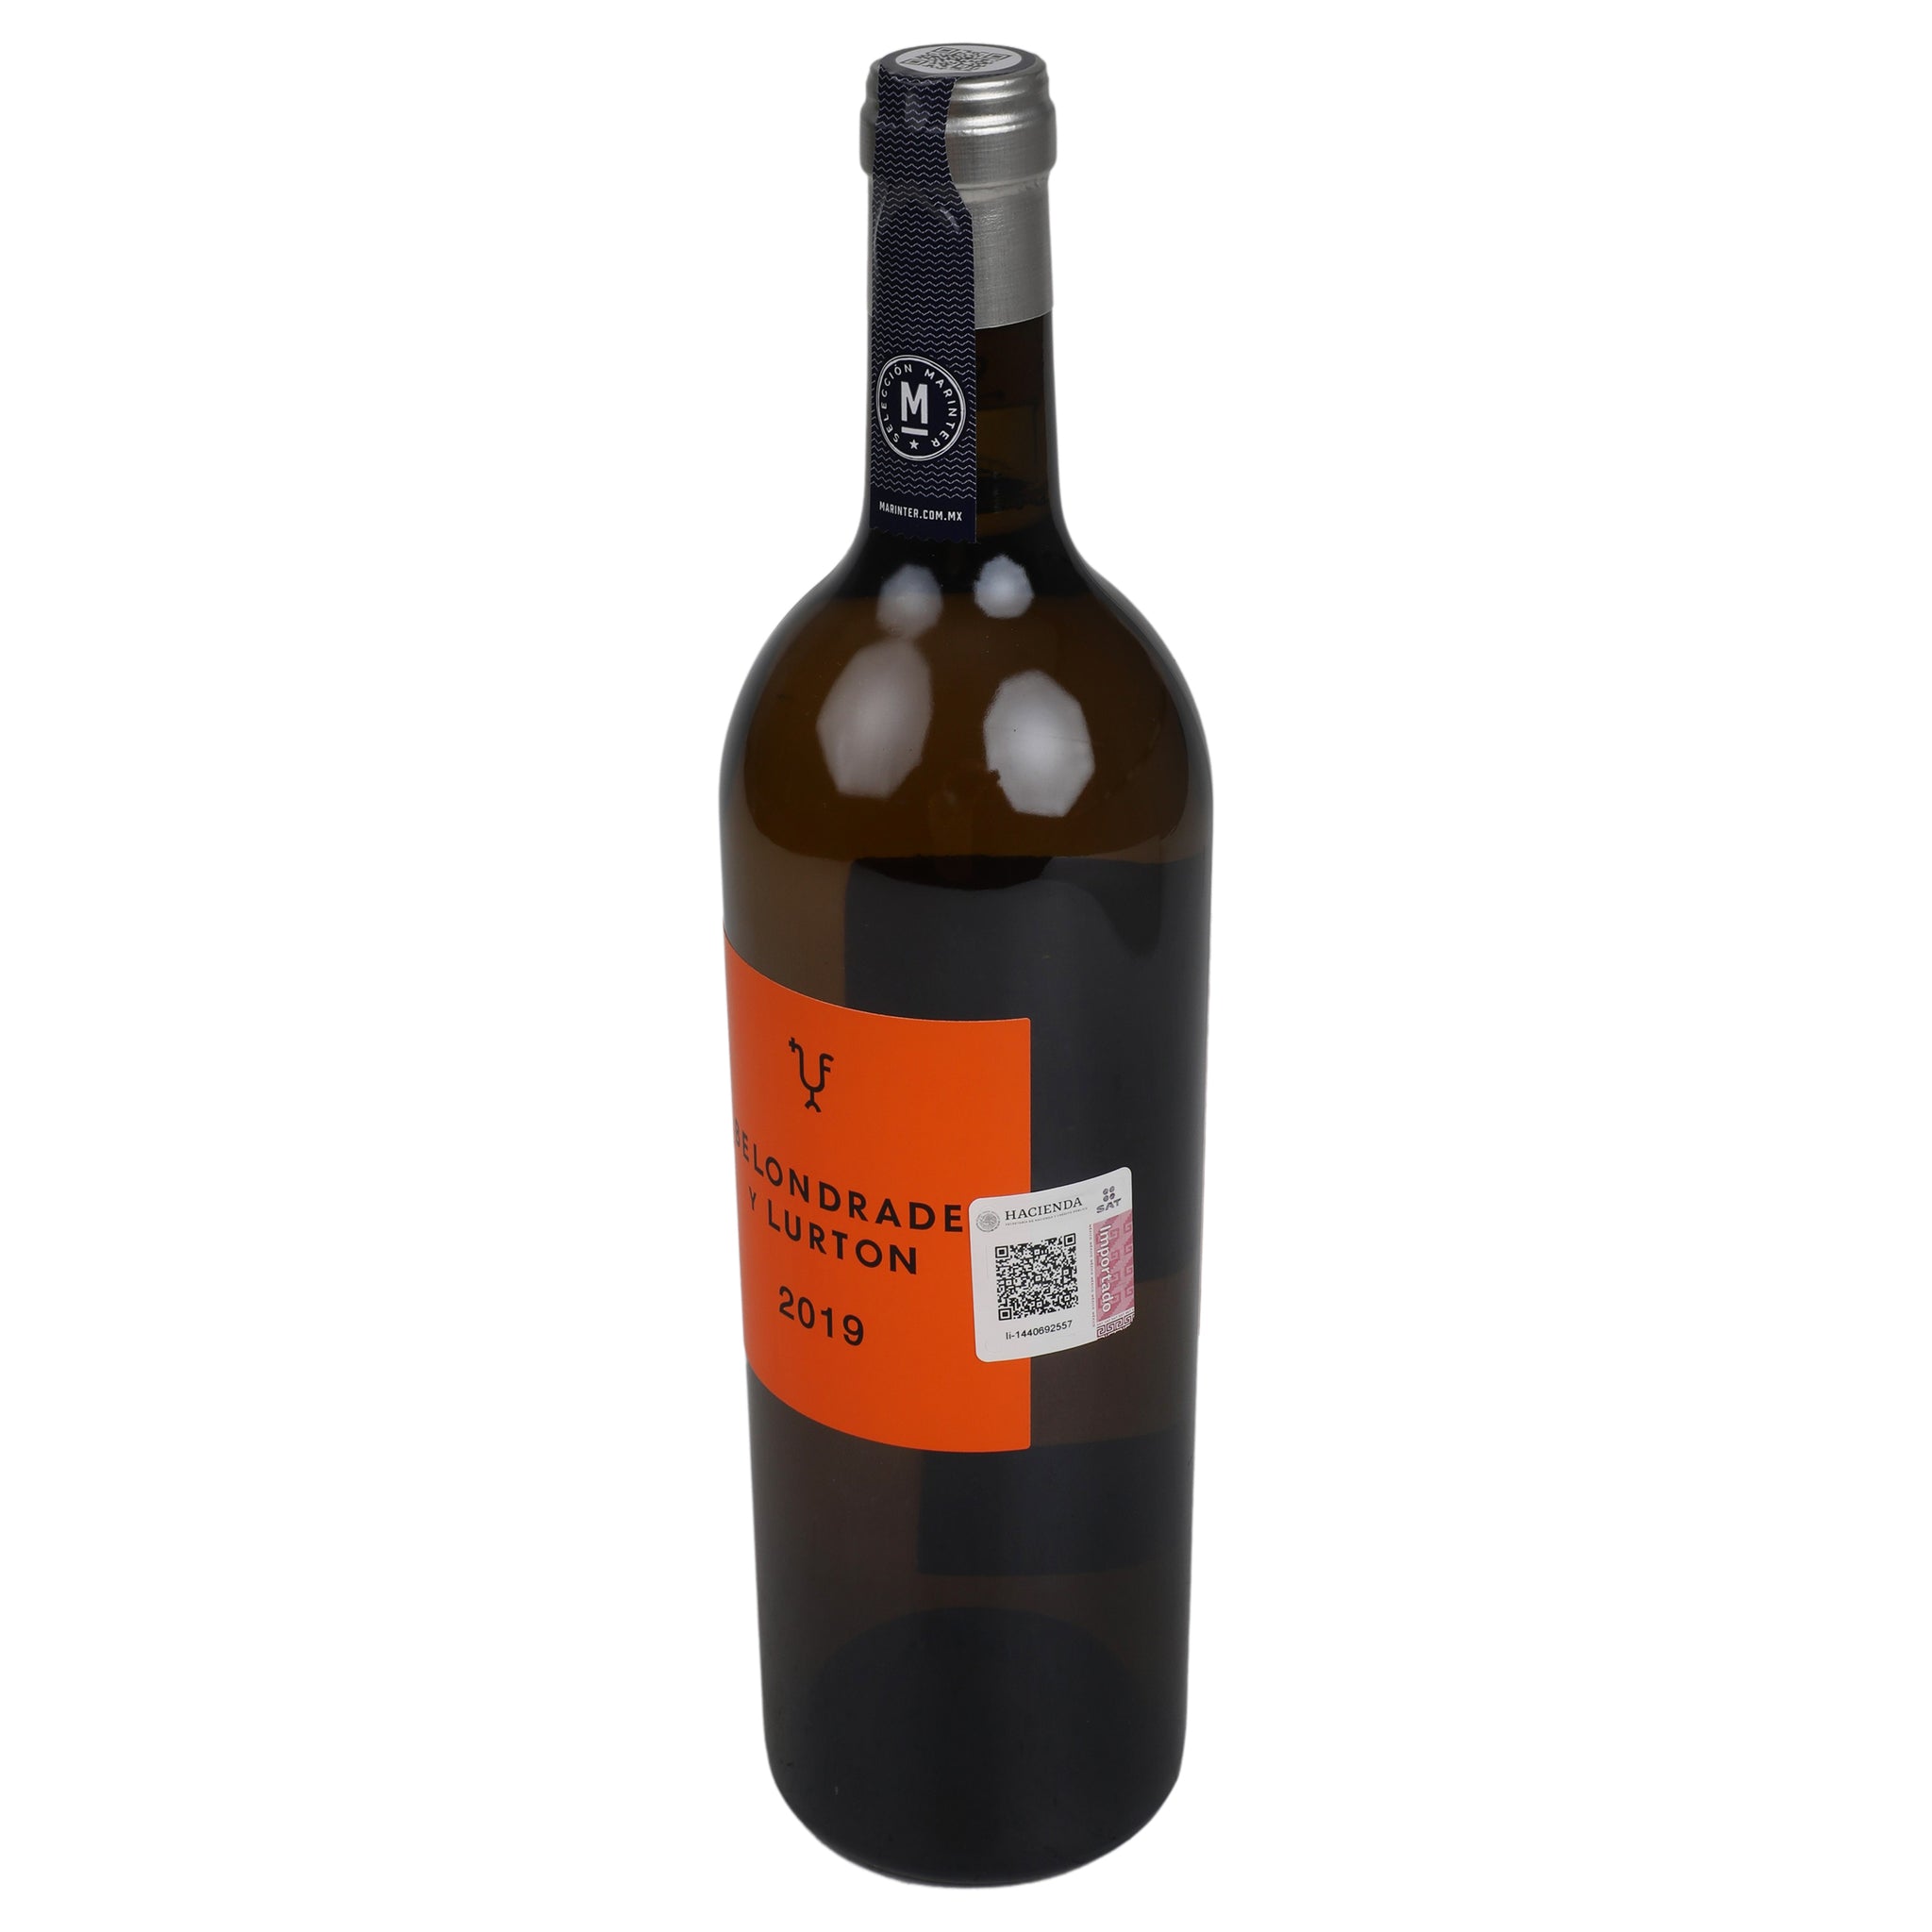 Vino Blanco - Belondrade y Lurton 2019 - 750 ml